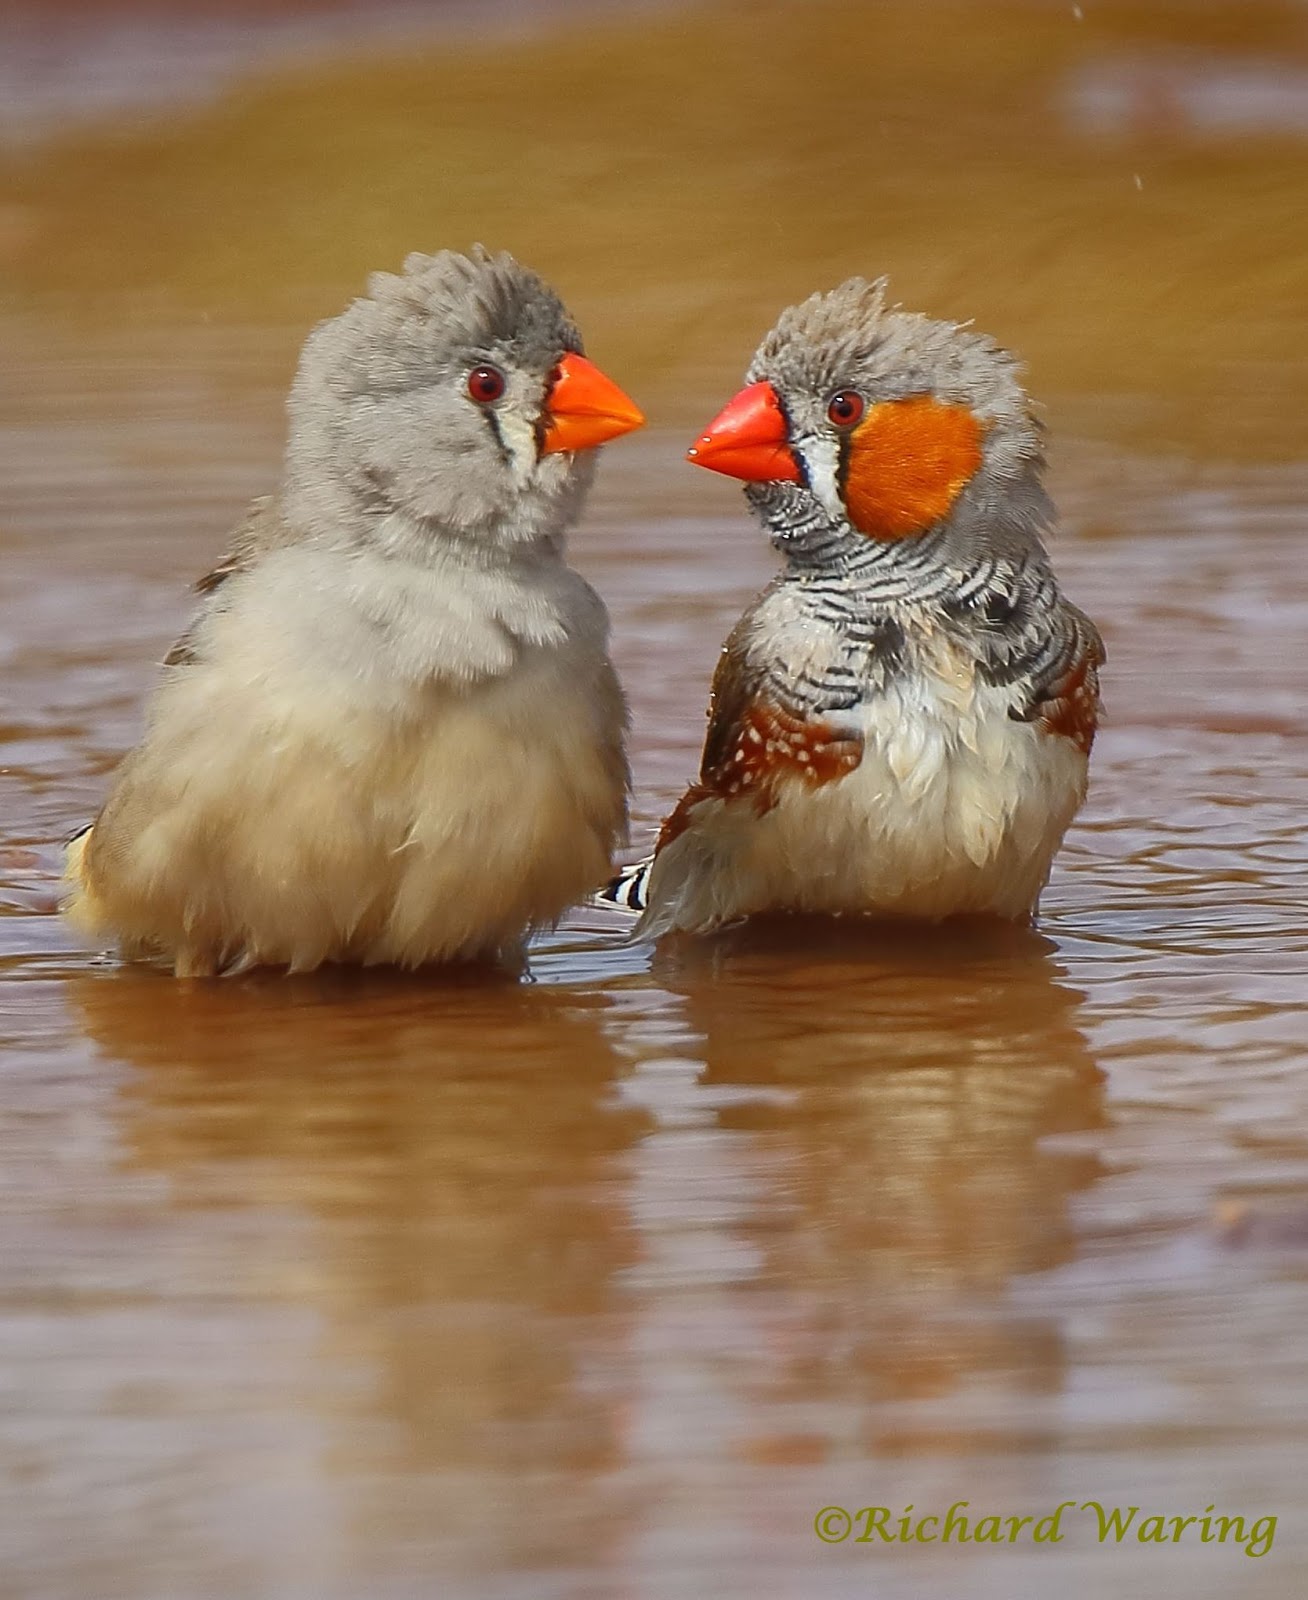 Richard Waring's Birds of Australia: A (loving?) couple of Zebra Finches